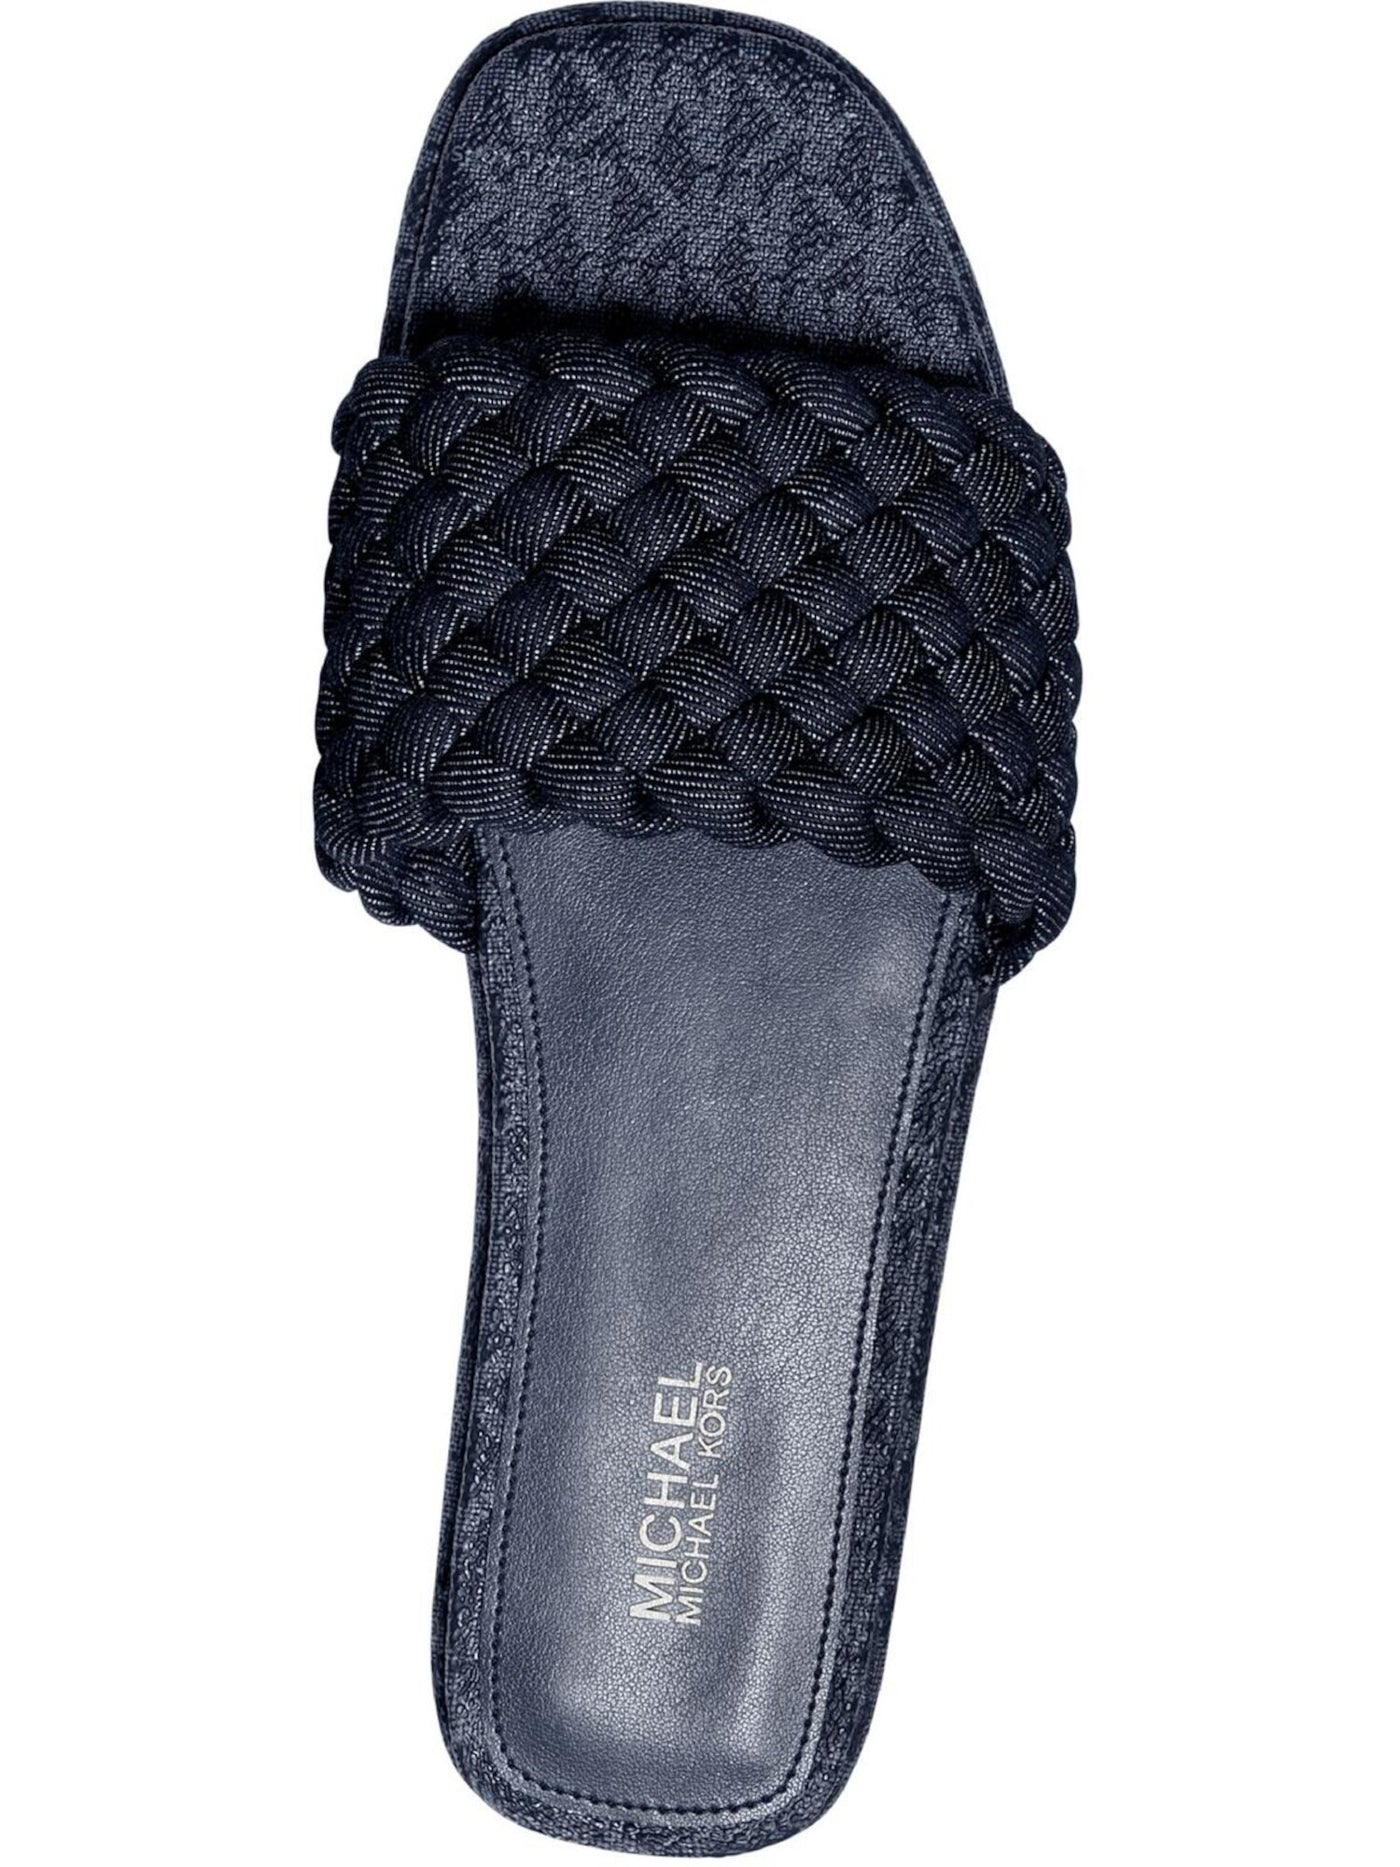 MICHAEL KORS Womens Navy Logo Woven Comfort Amelia Square Toe Slip On Slide Sandals Shoes 6.5 M